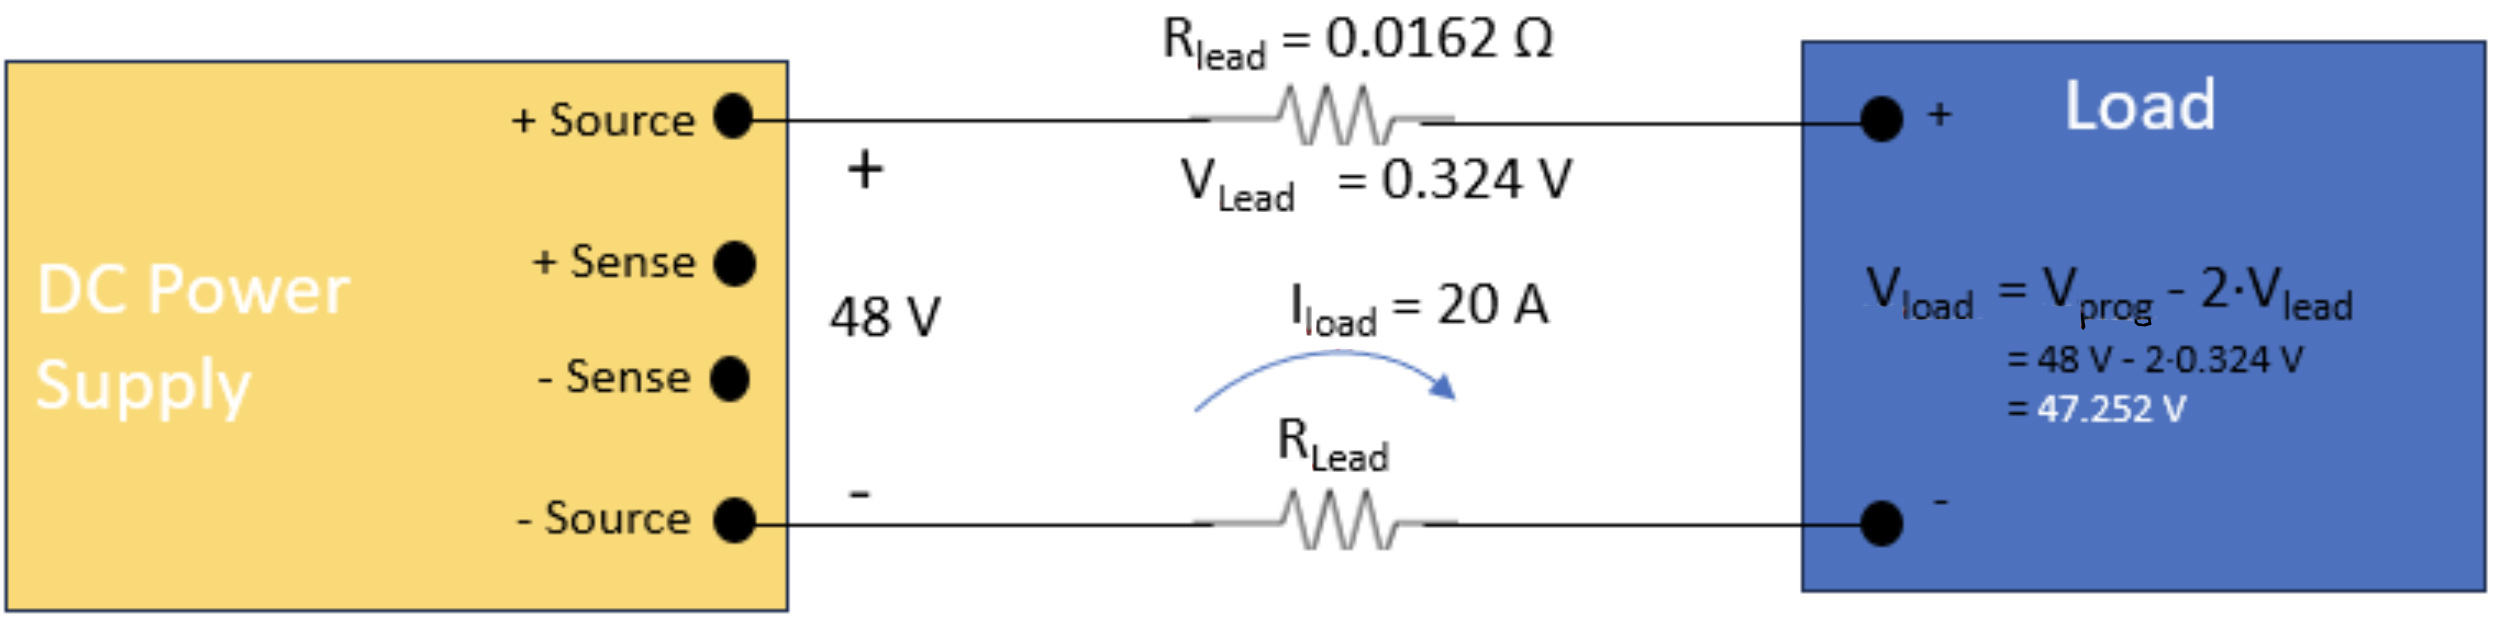 Programmed voltage instructions